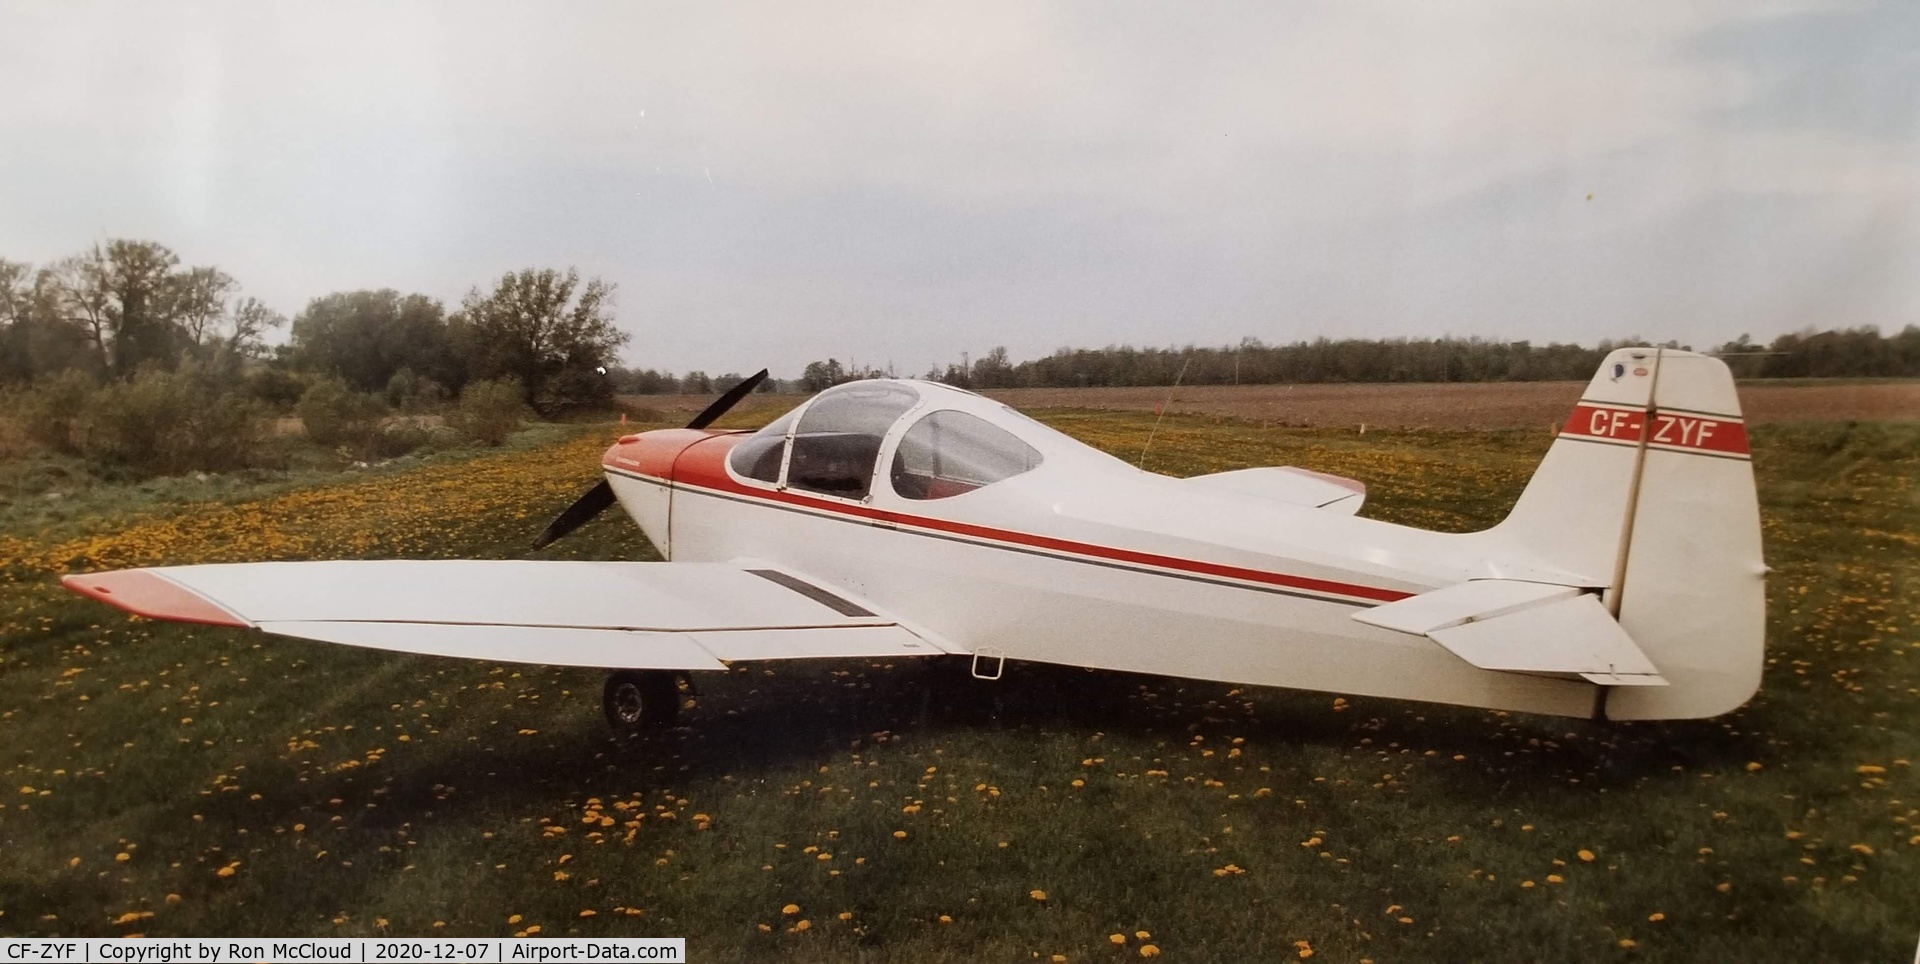 CF-ZYF, 1971 Piel CP-301 Emeraude C/N 333, Grandfather's plane